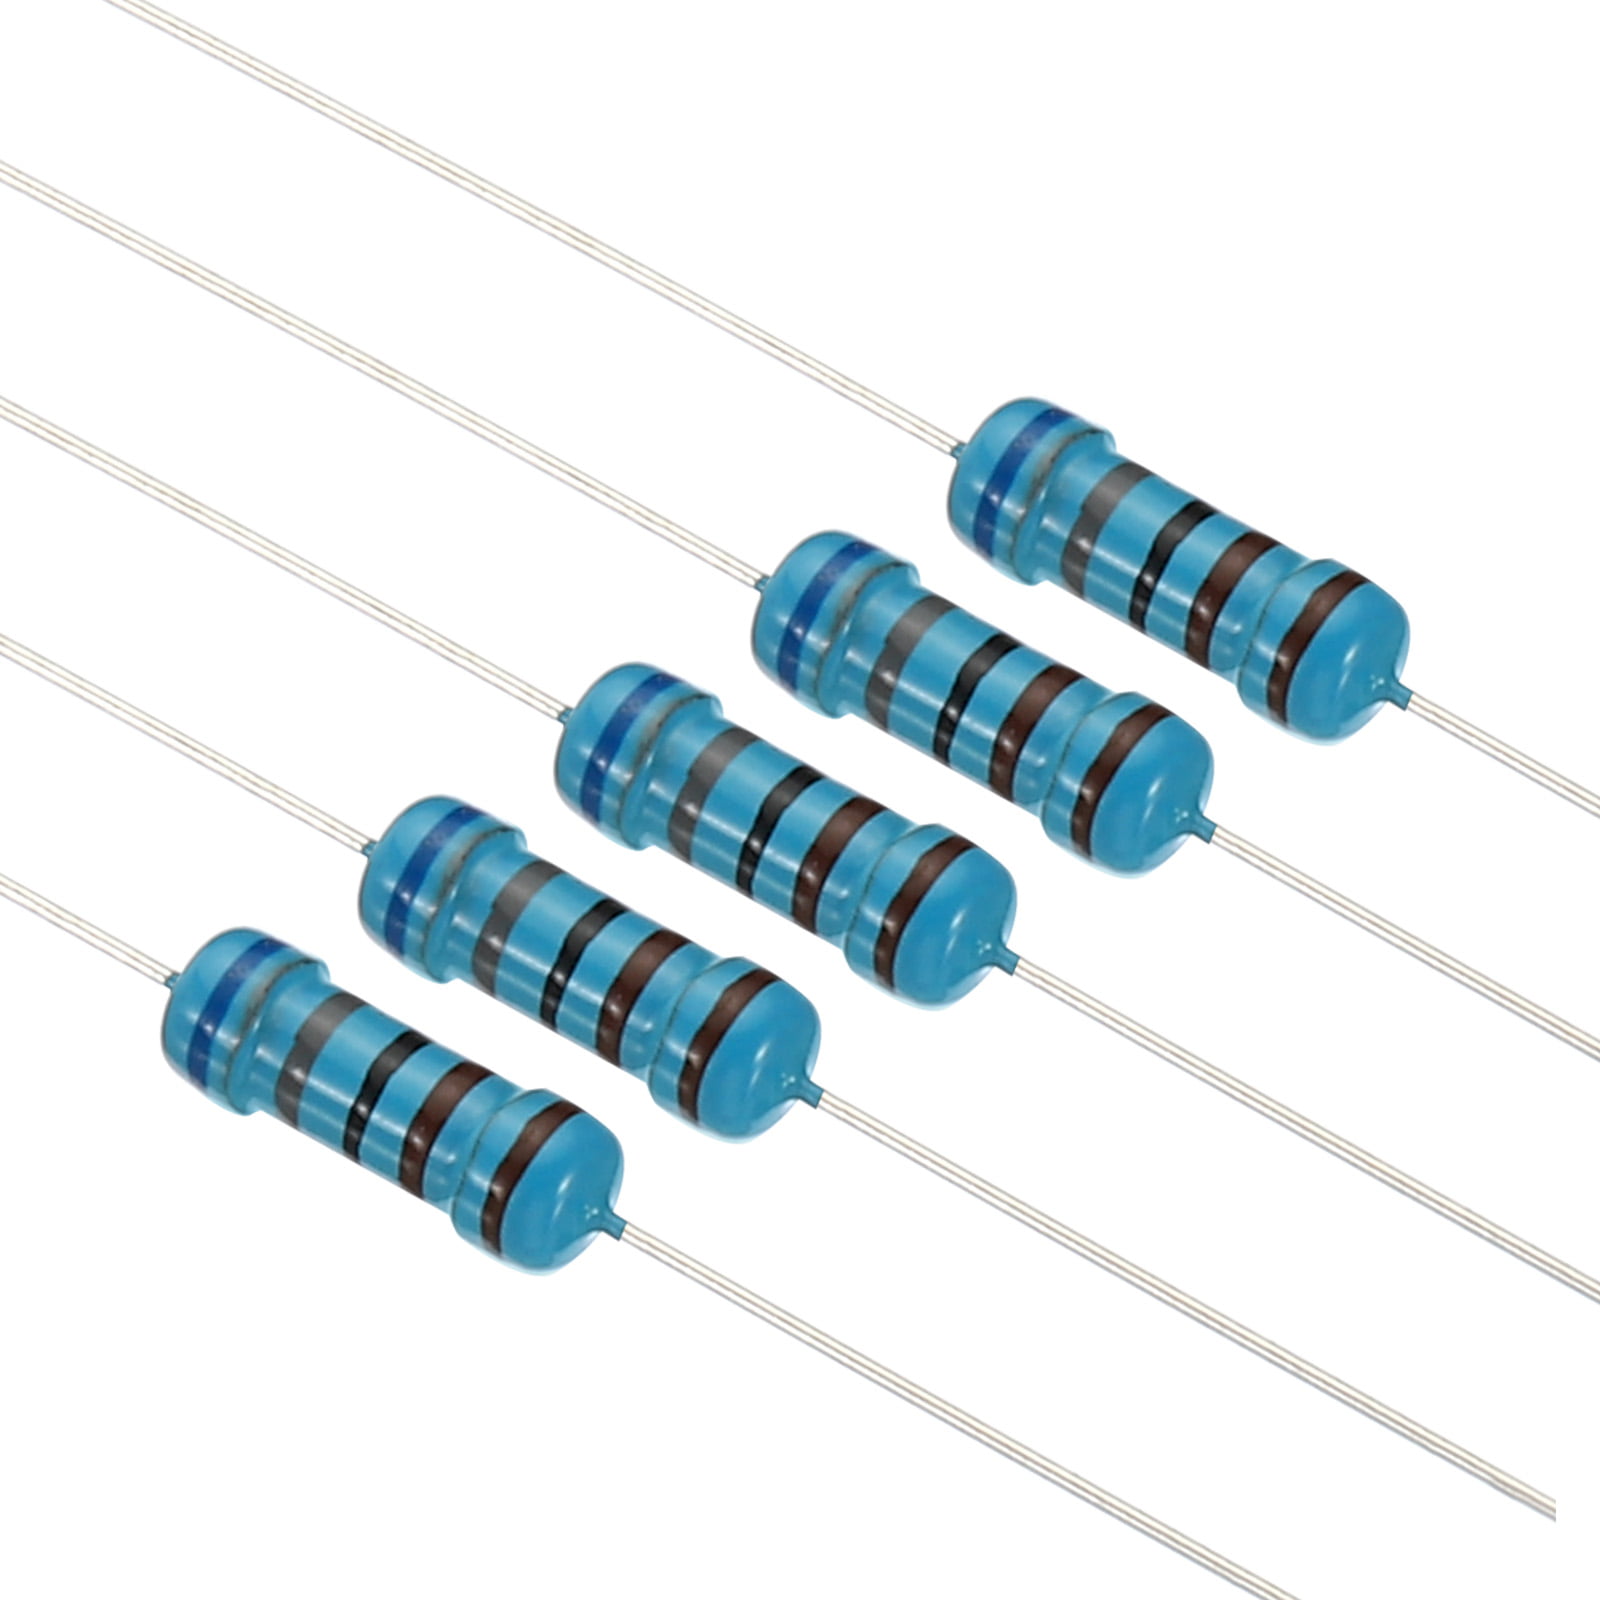 Resistor Assortment Kit - Set of 600 Assorted Resistors from 10